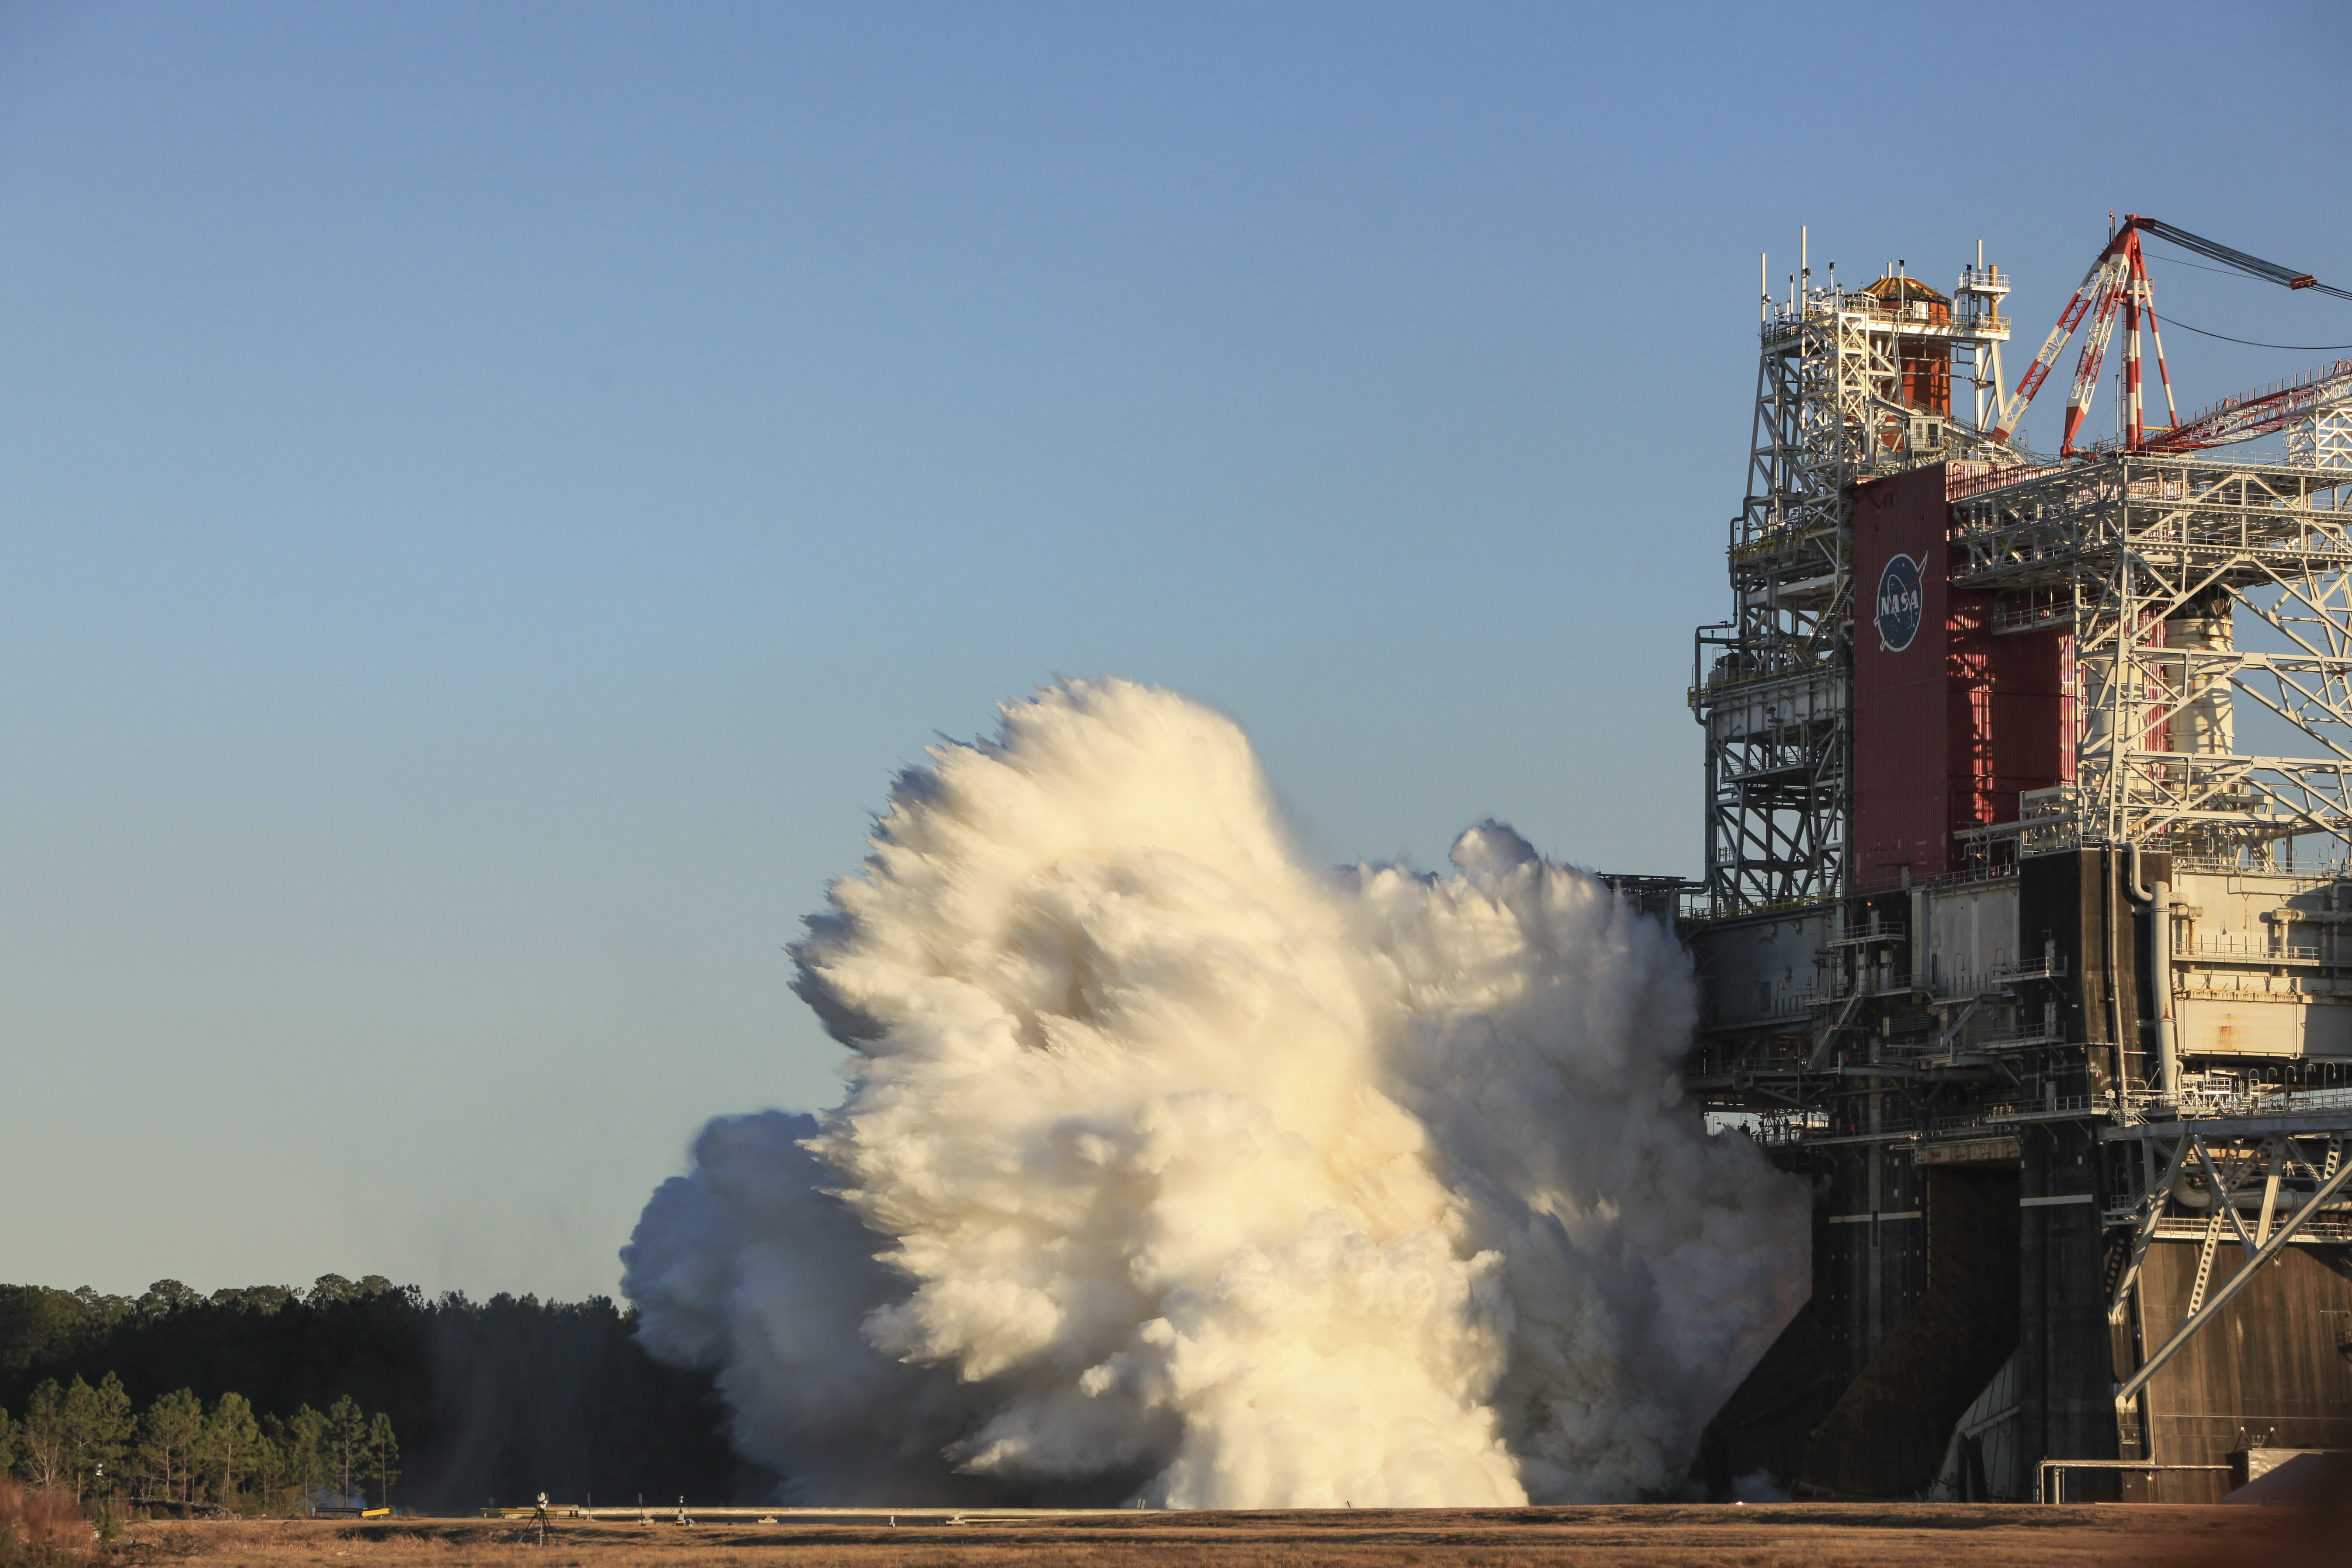 Hot Fire Test of SLS Rocket Core Stage